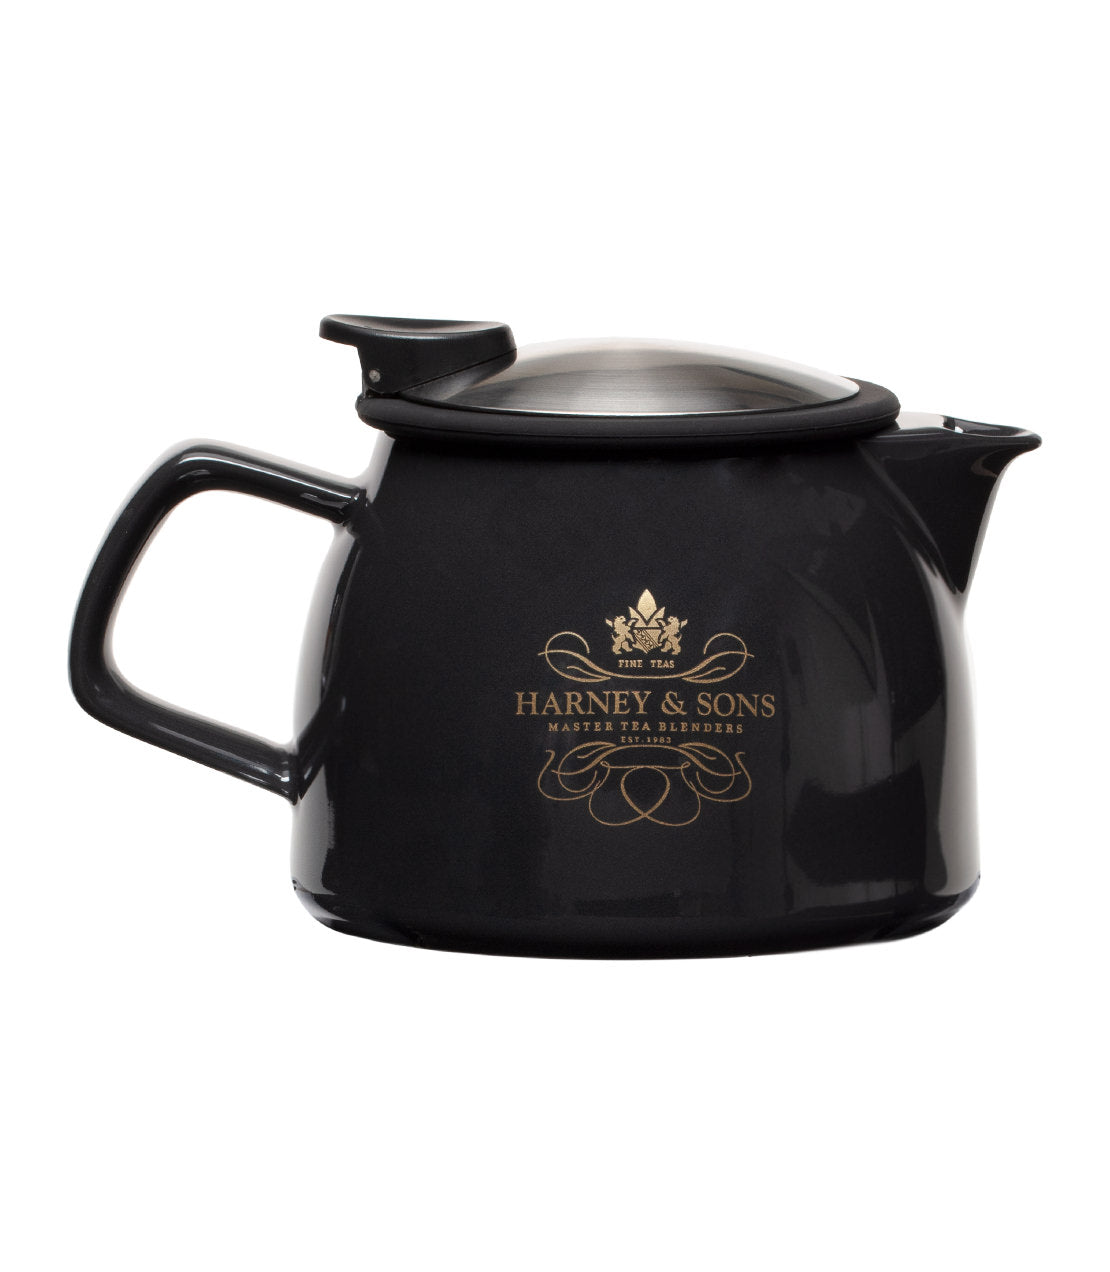 Harney & Sons Black Bell Teapot - 16 oz.  - Harney & Sons Fine Teas